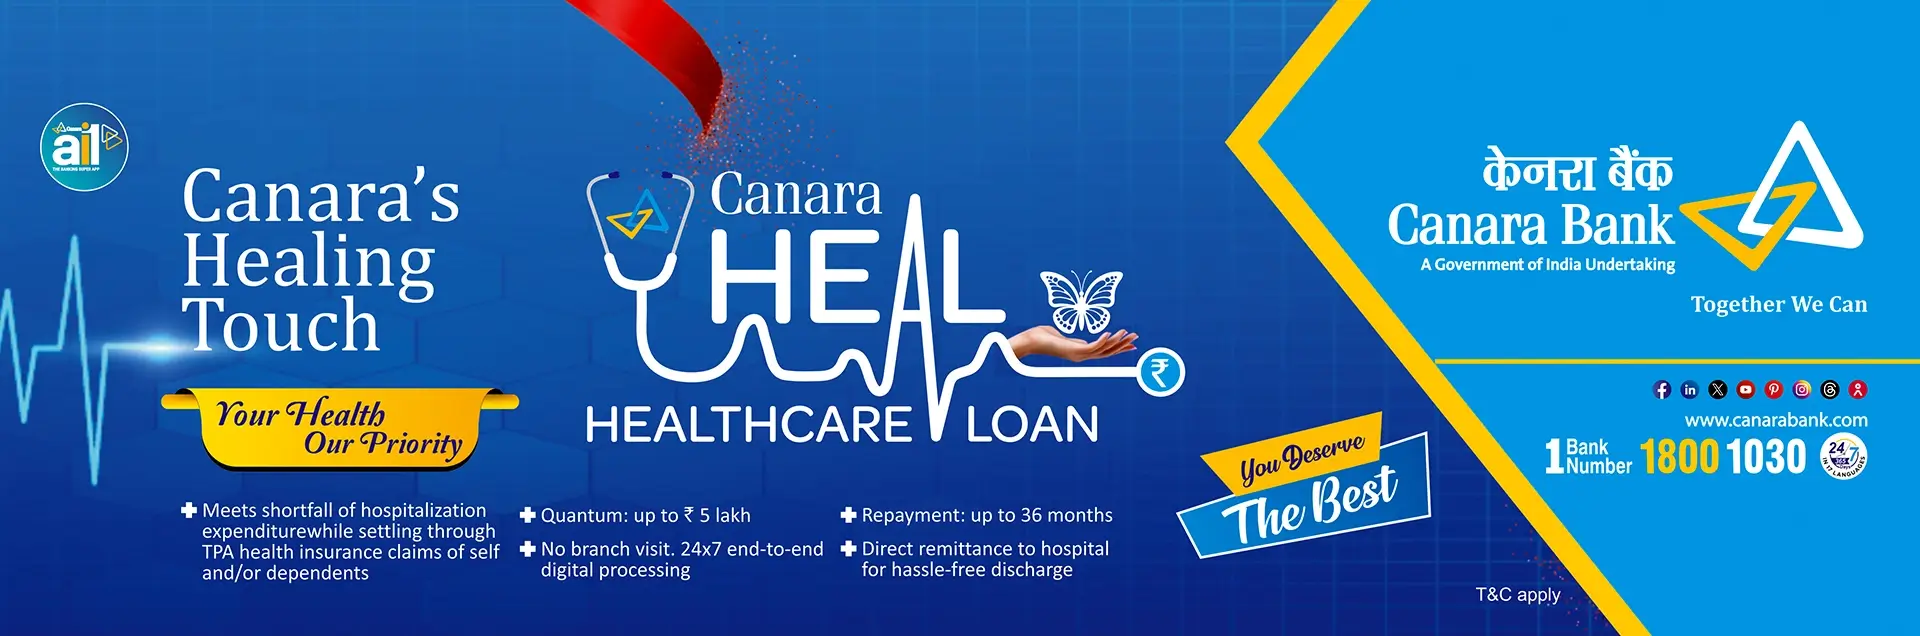 Canara Heal Launch Ad